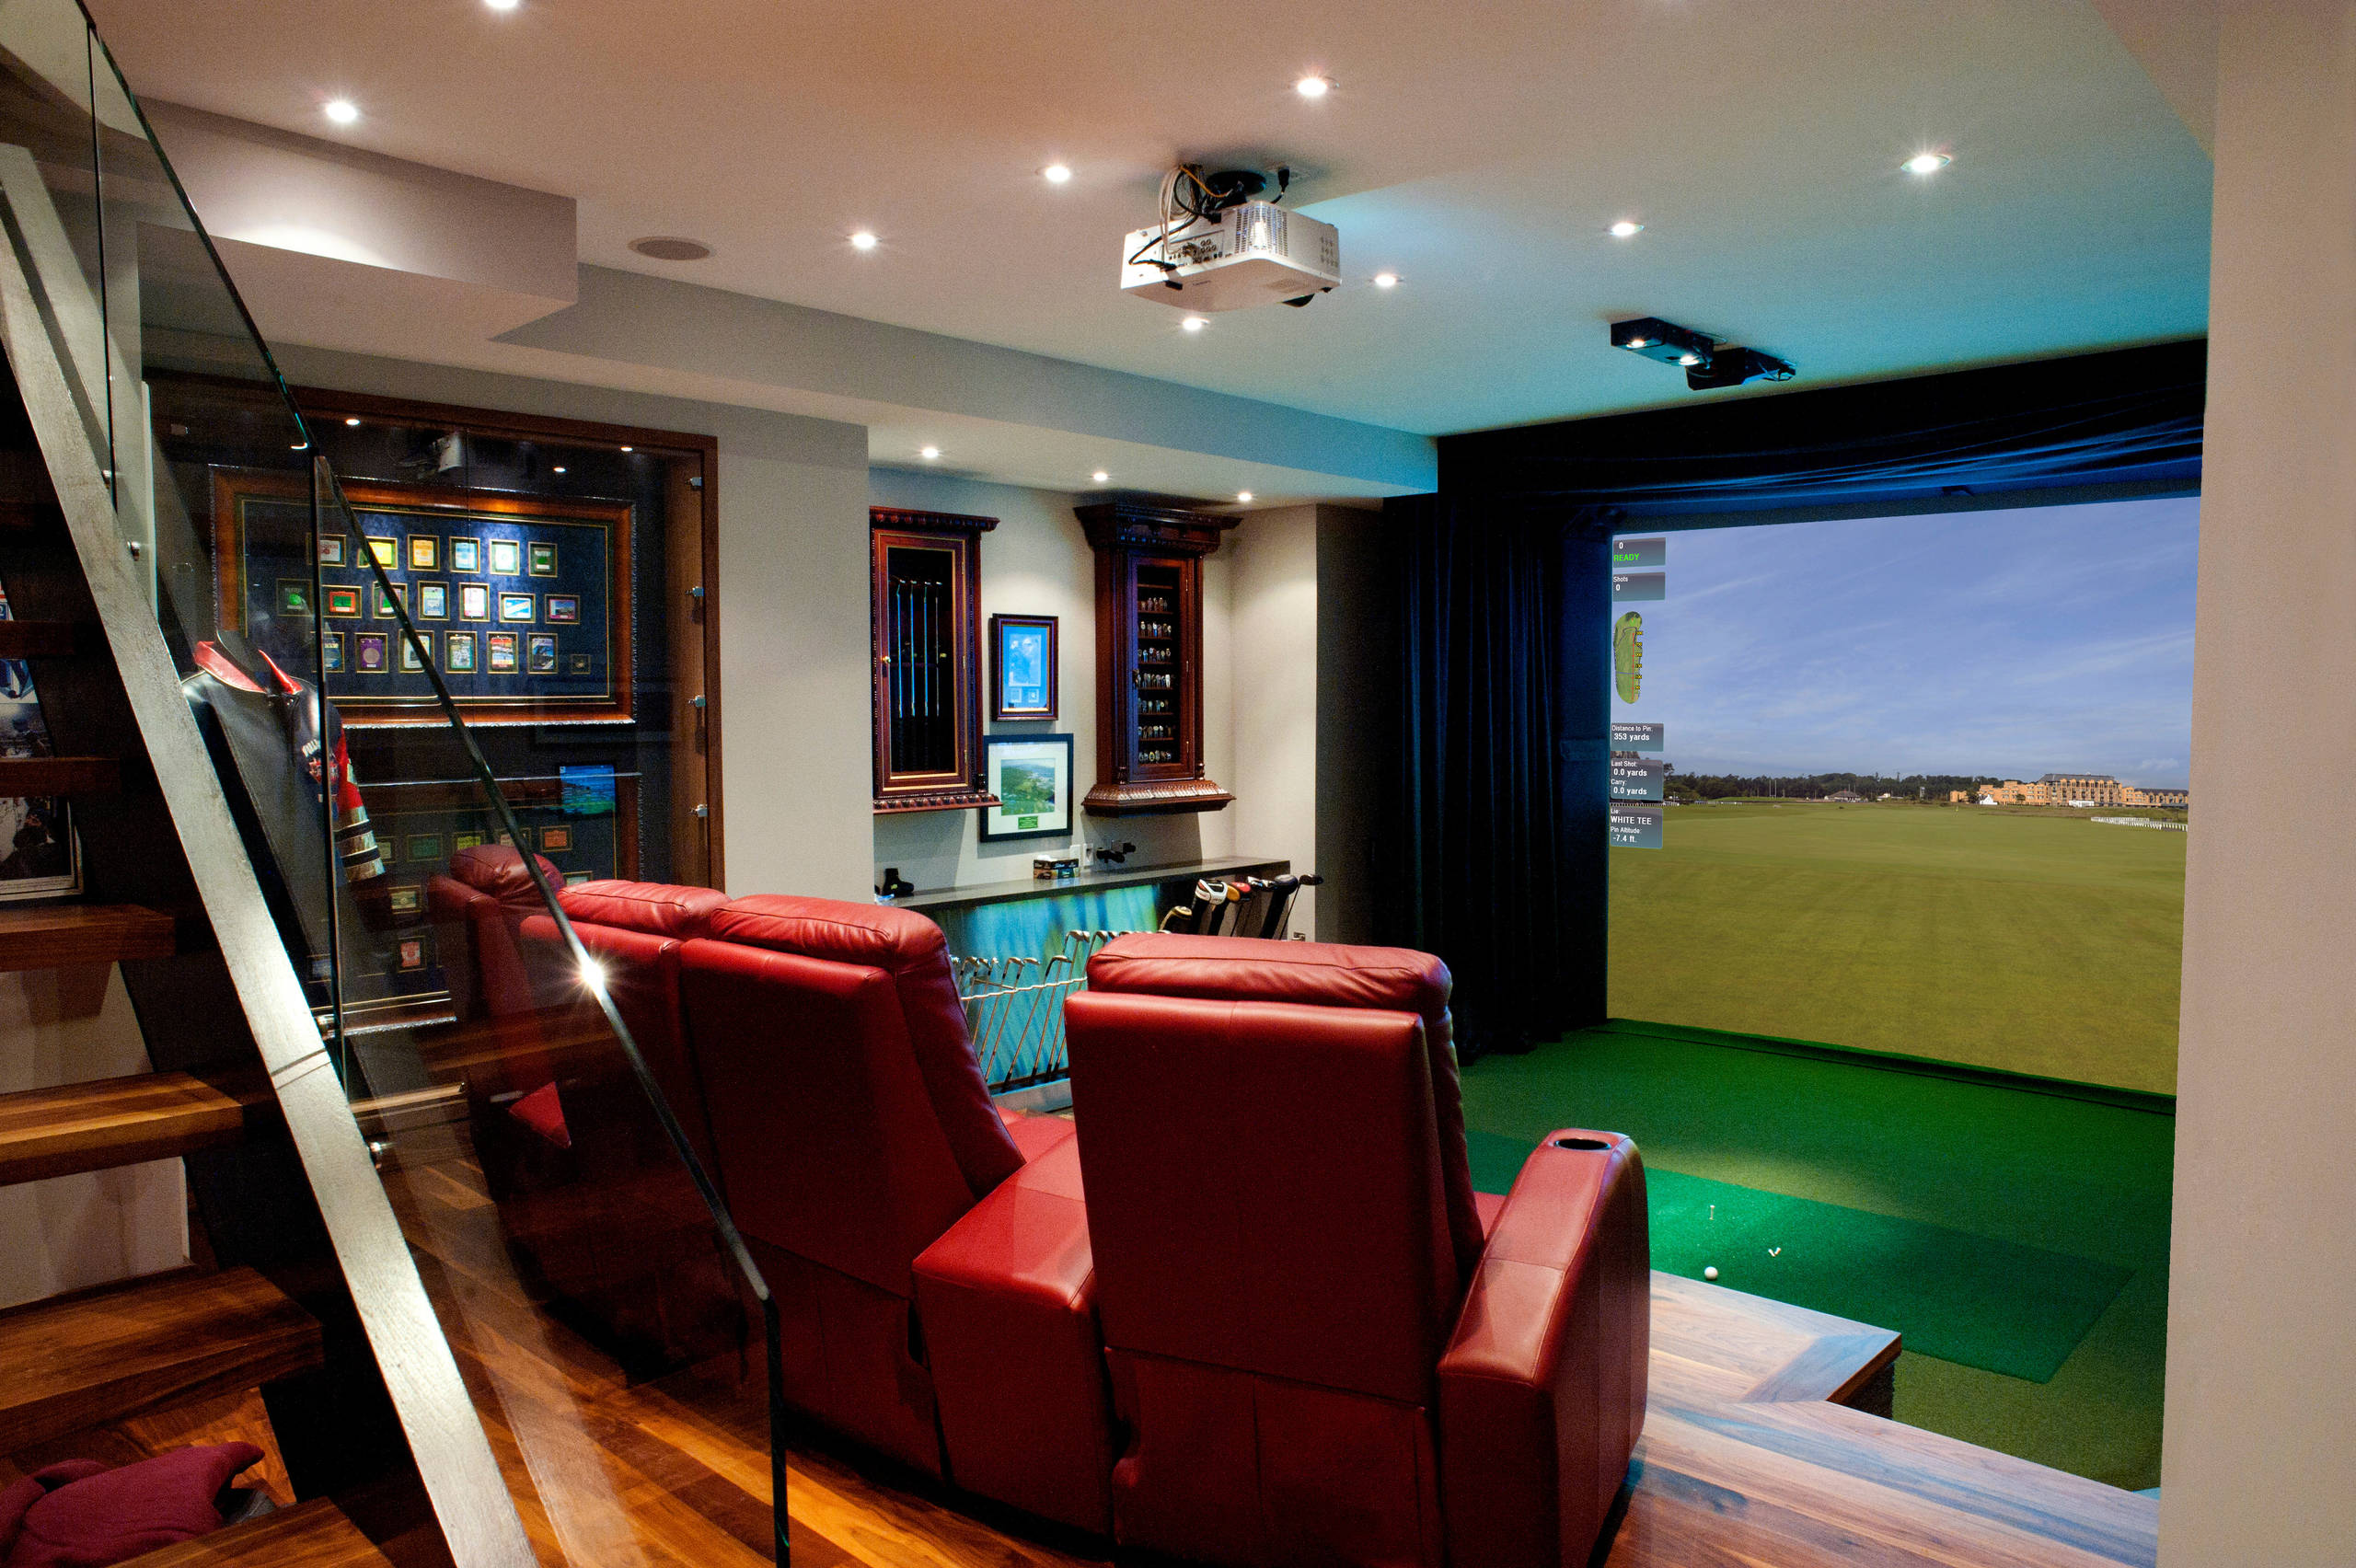 HD Golf Simulators - Traditional - Home Theater - Toronto | Houzz